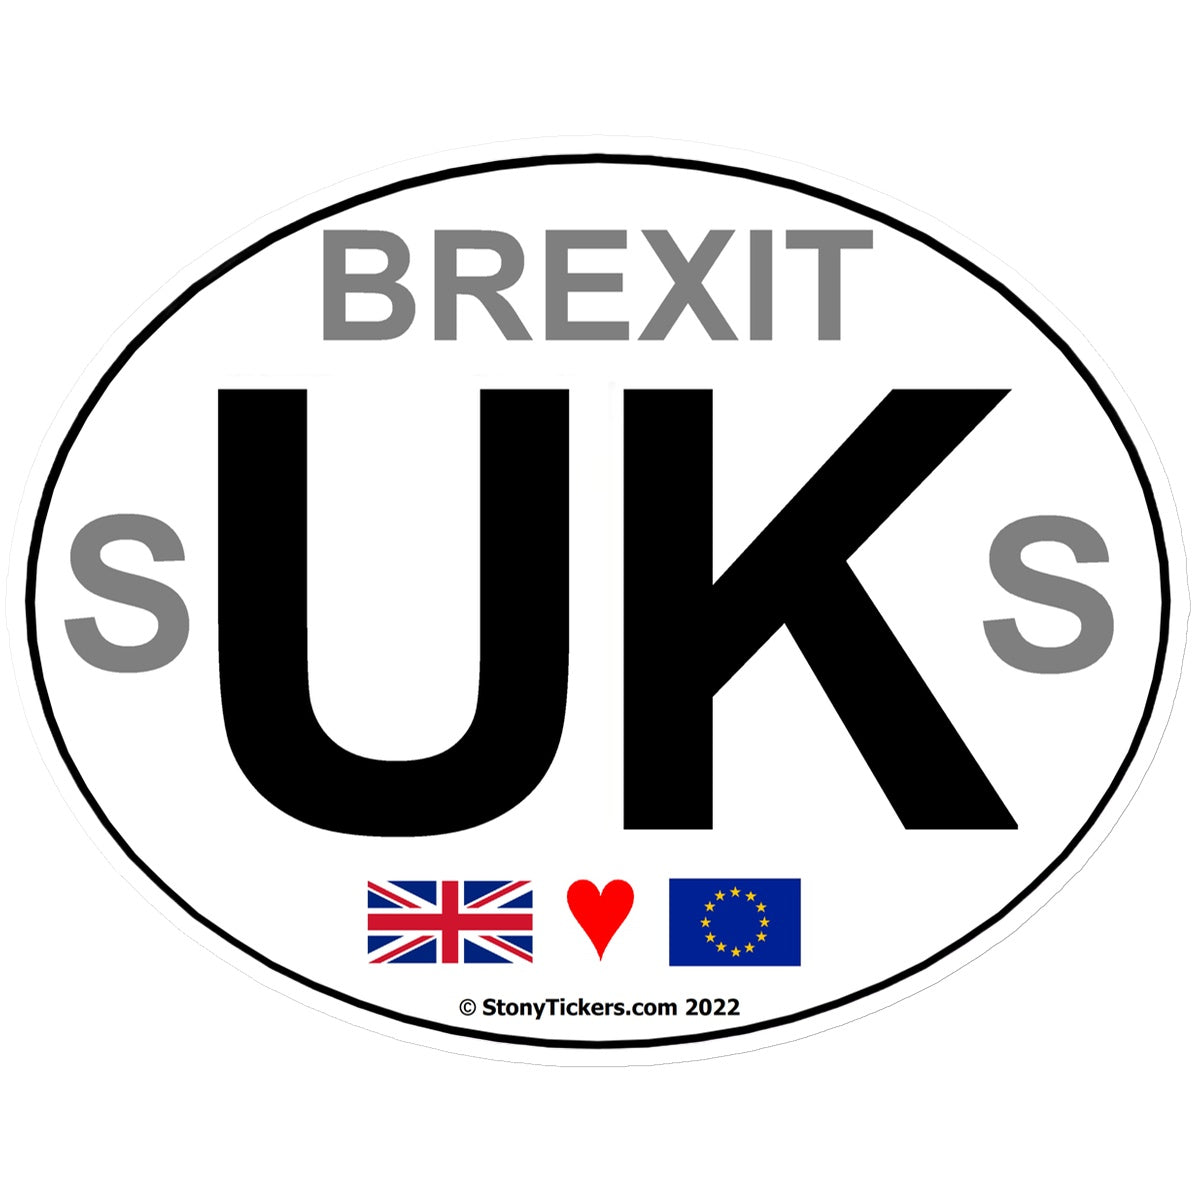 Brexit sUKs Car Sticker